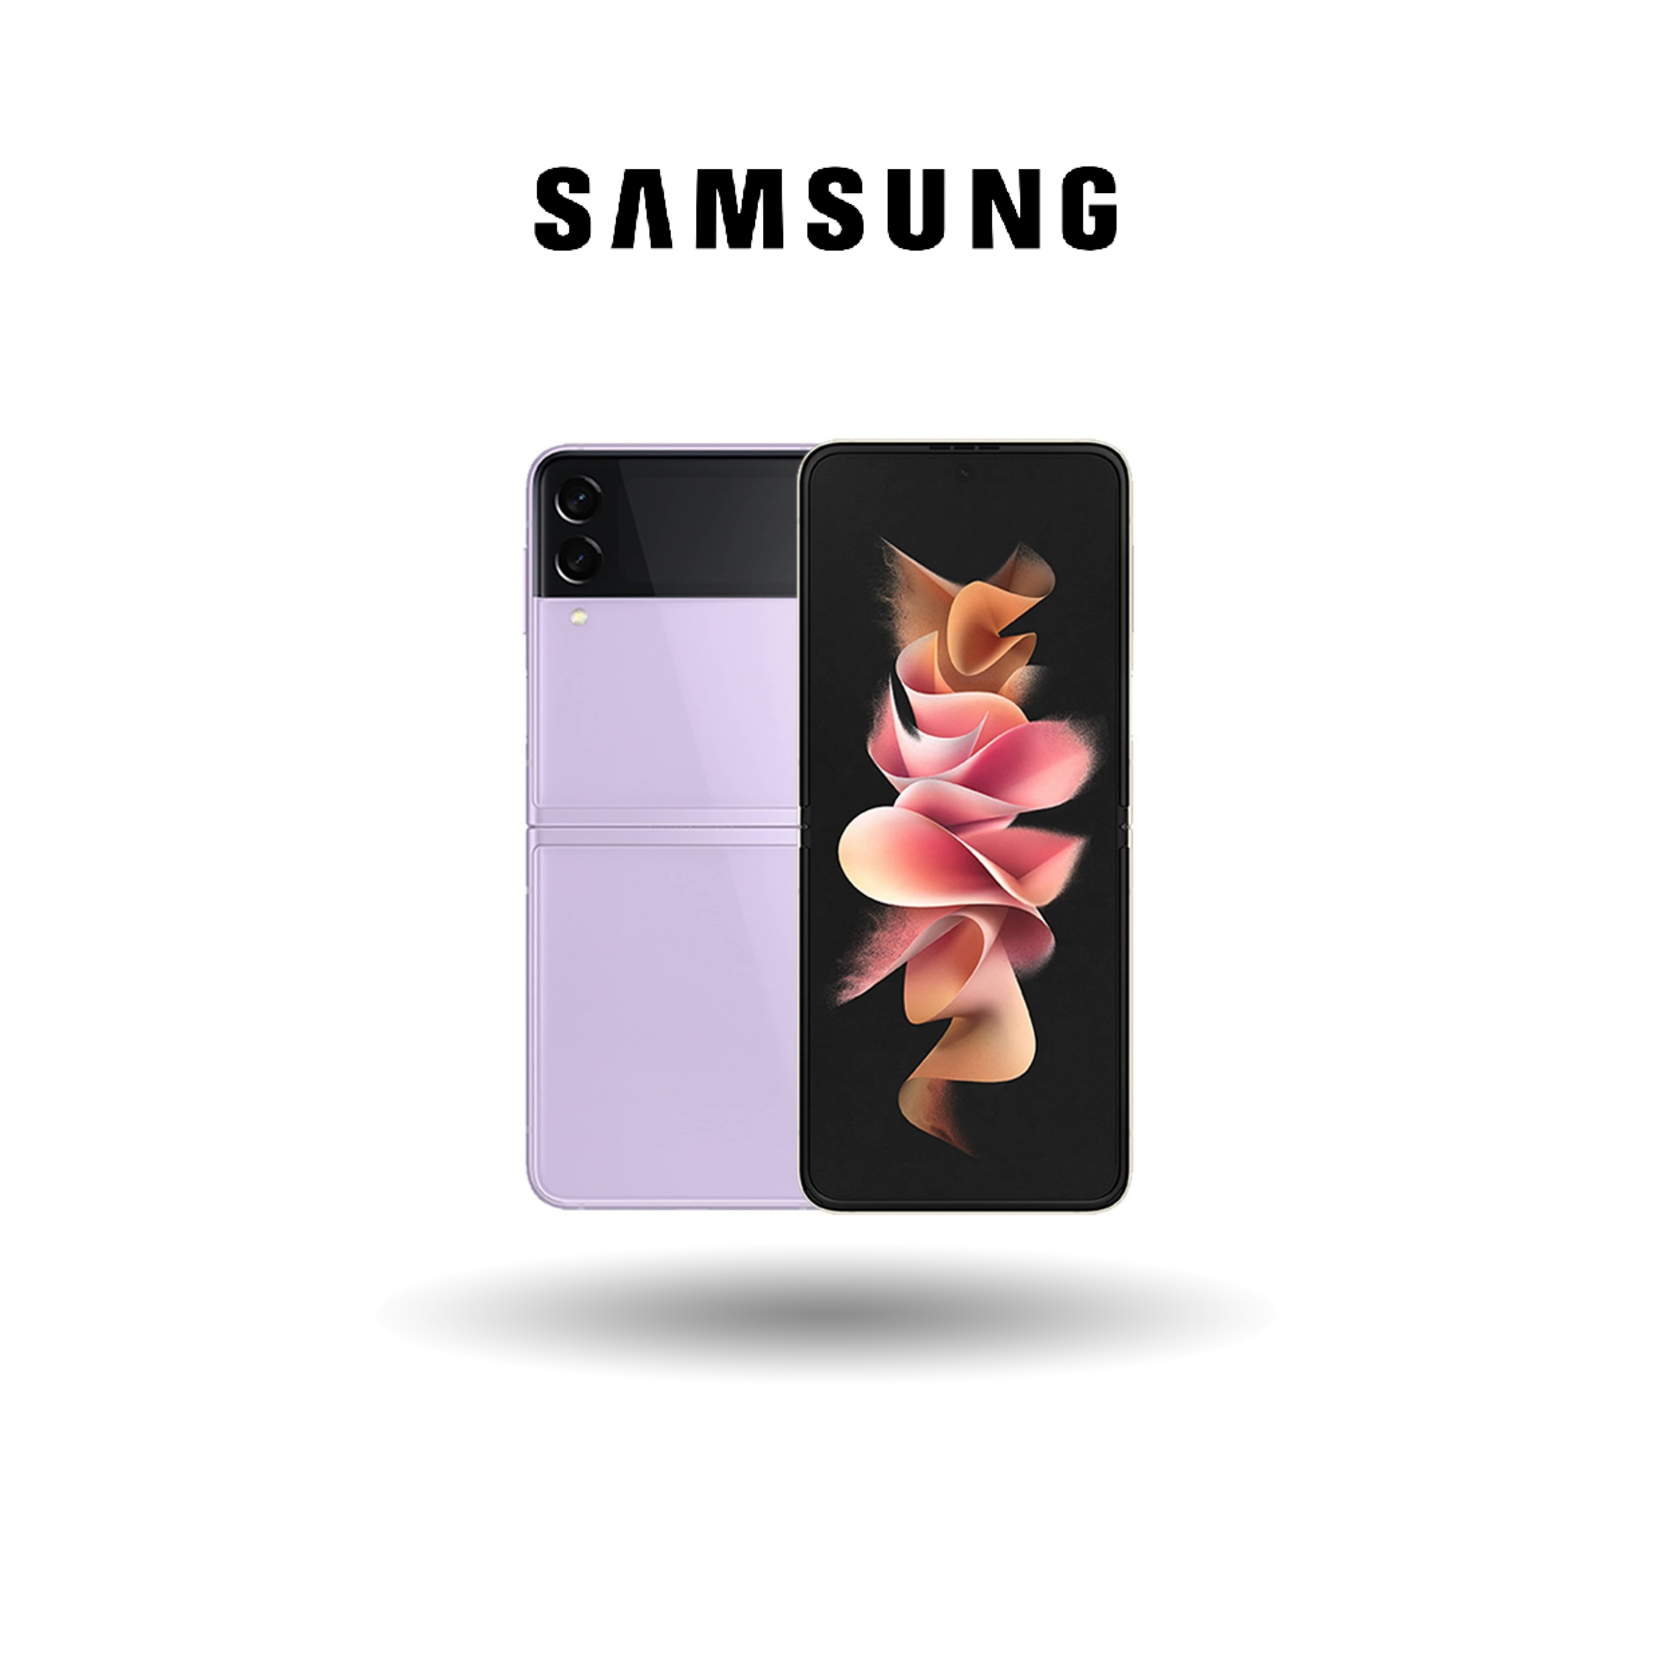 Samsung Galaxy Z Flip 3 5G - 8GB RAM + 128GB ROM  Qualcomm Snapdragon 888  IPX8 Water Resistant